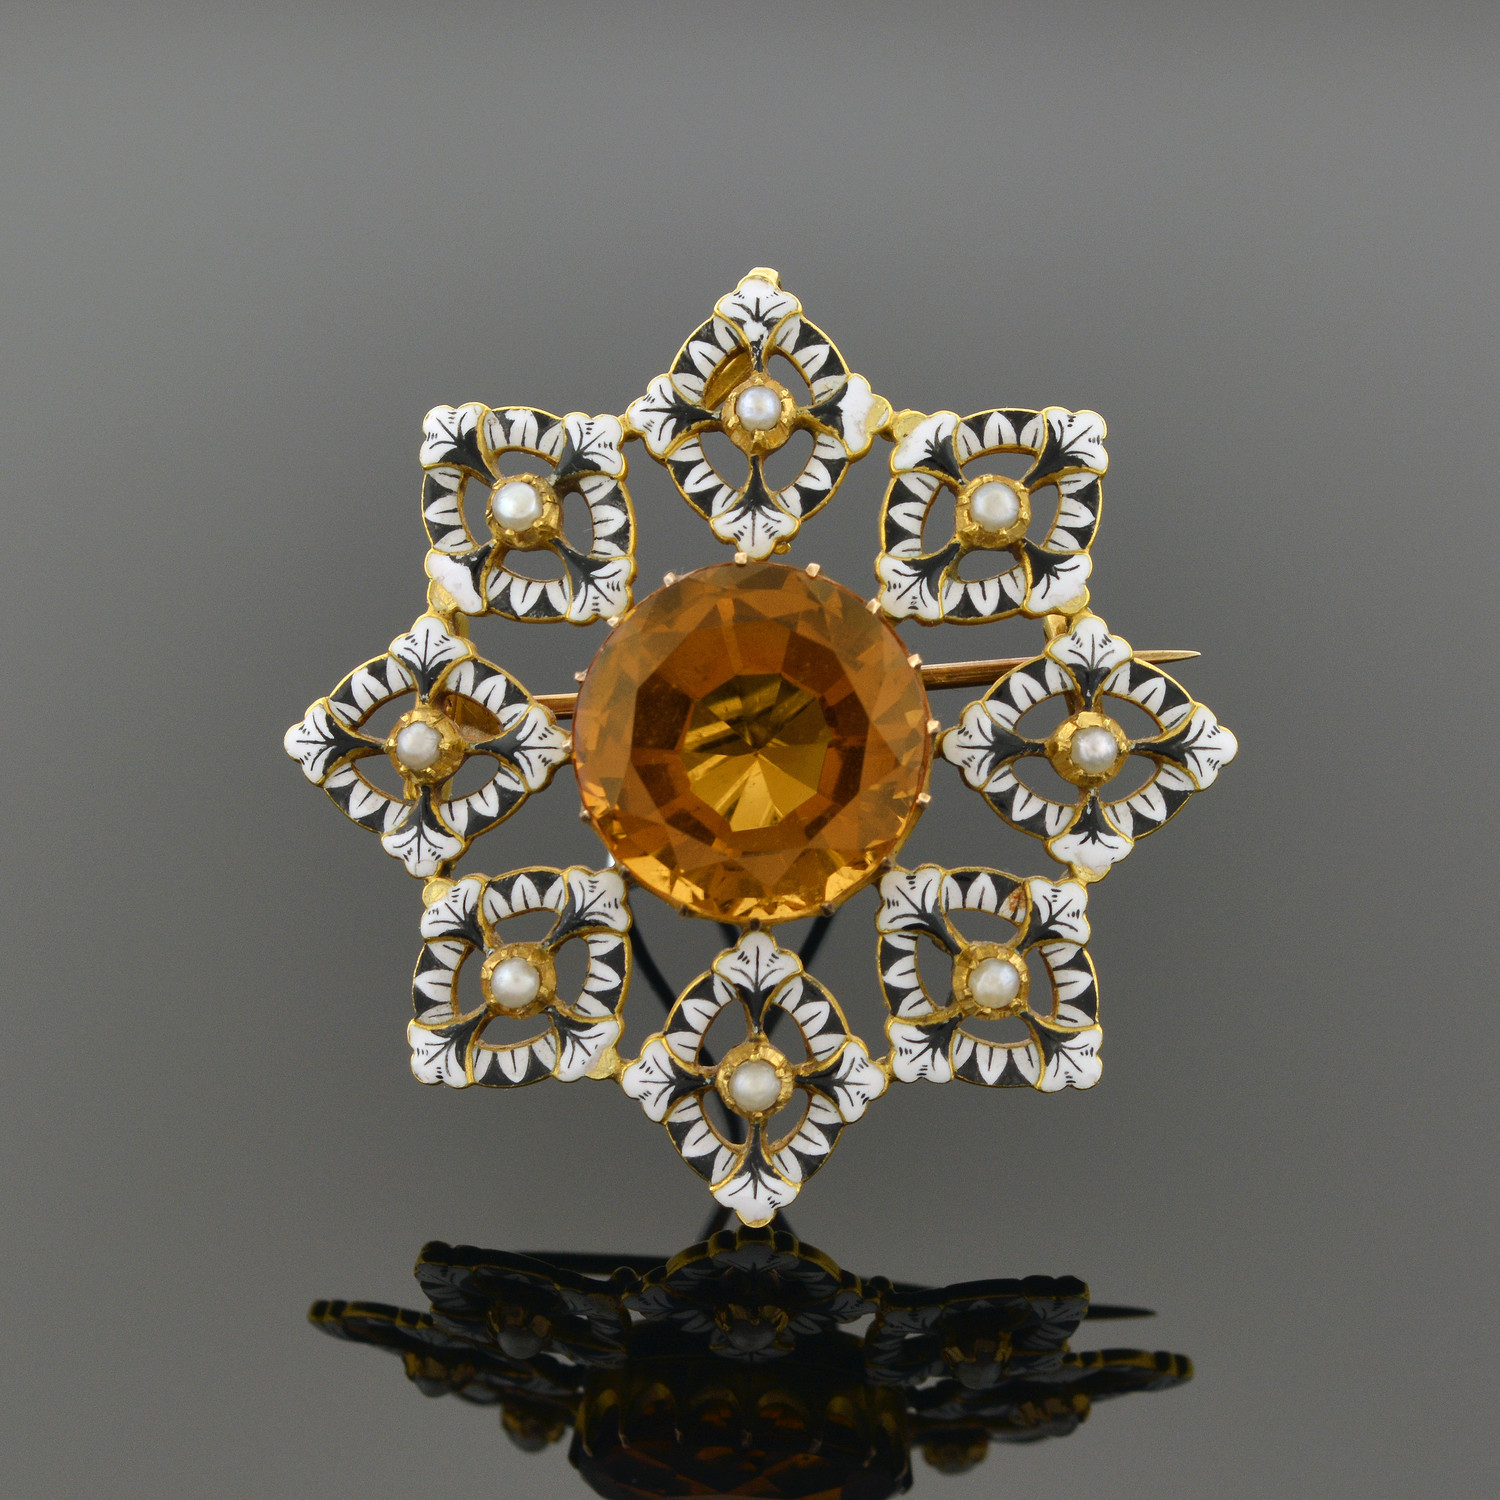 Renaissance-Revival Gold, Enamel, and Orange Zircon Brooch